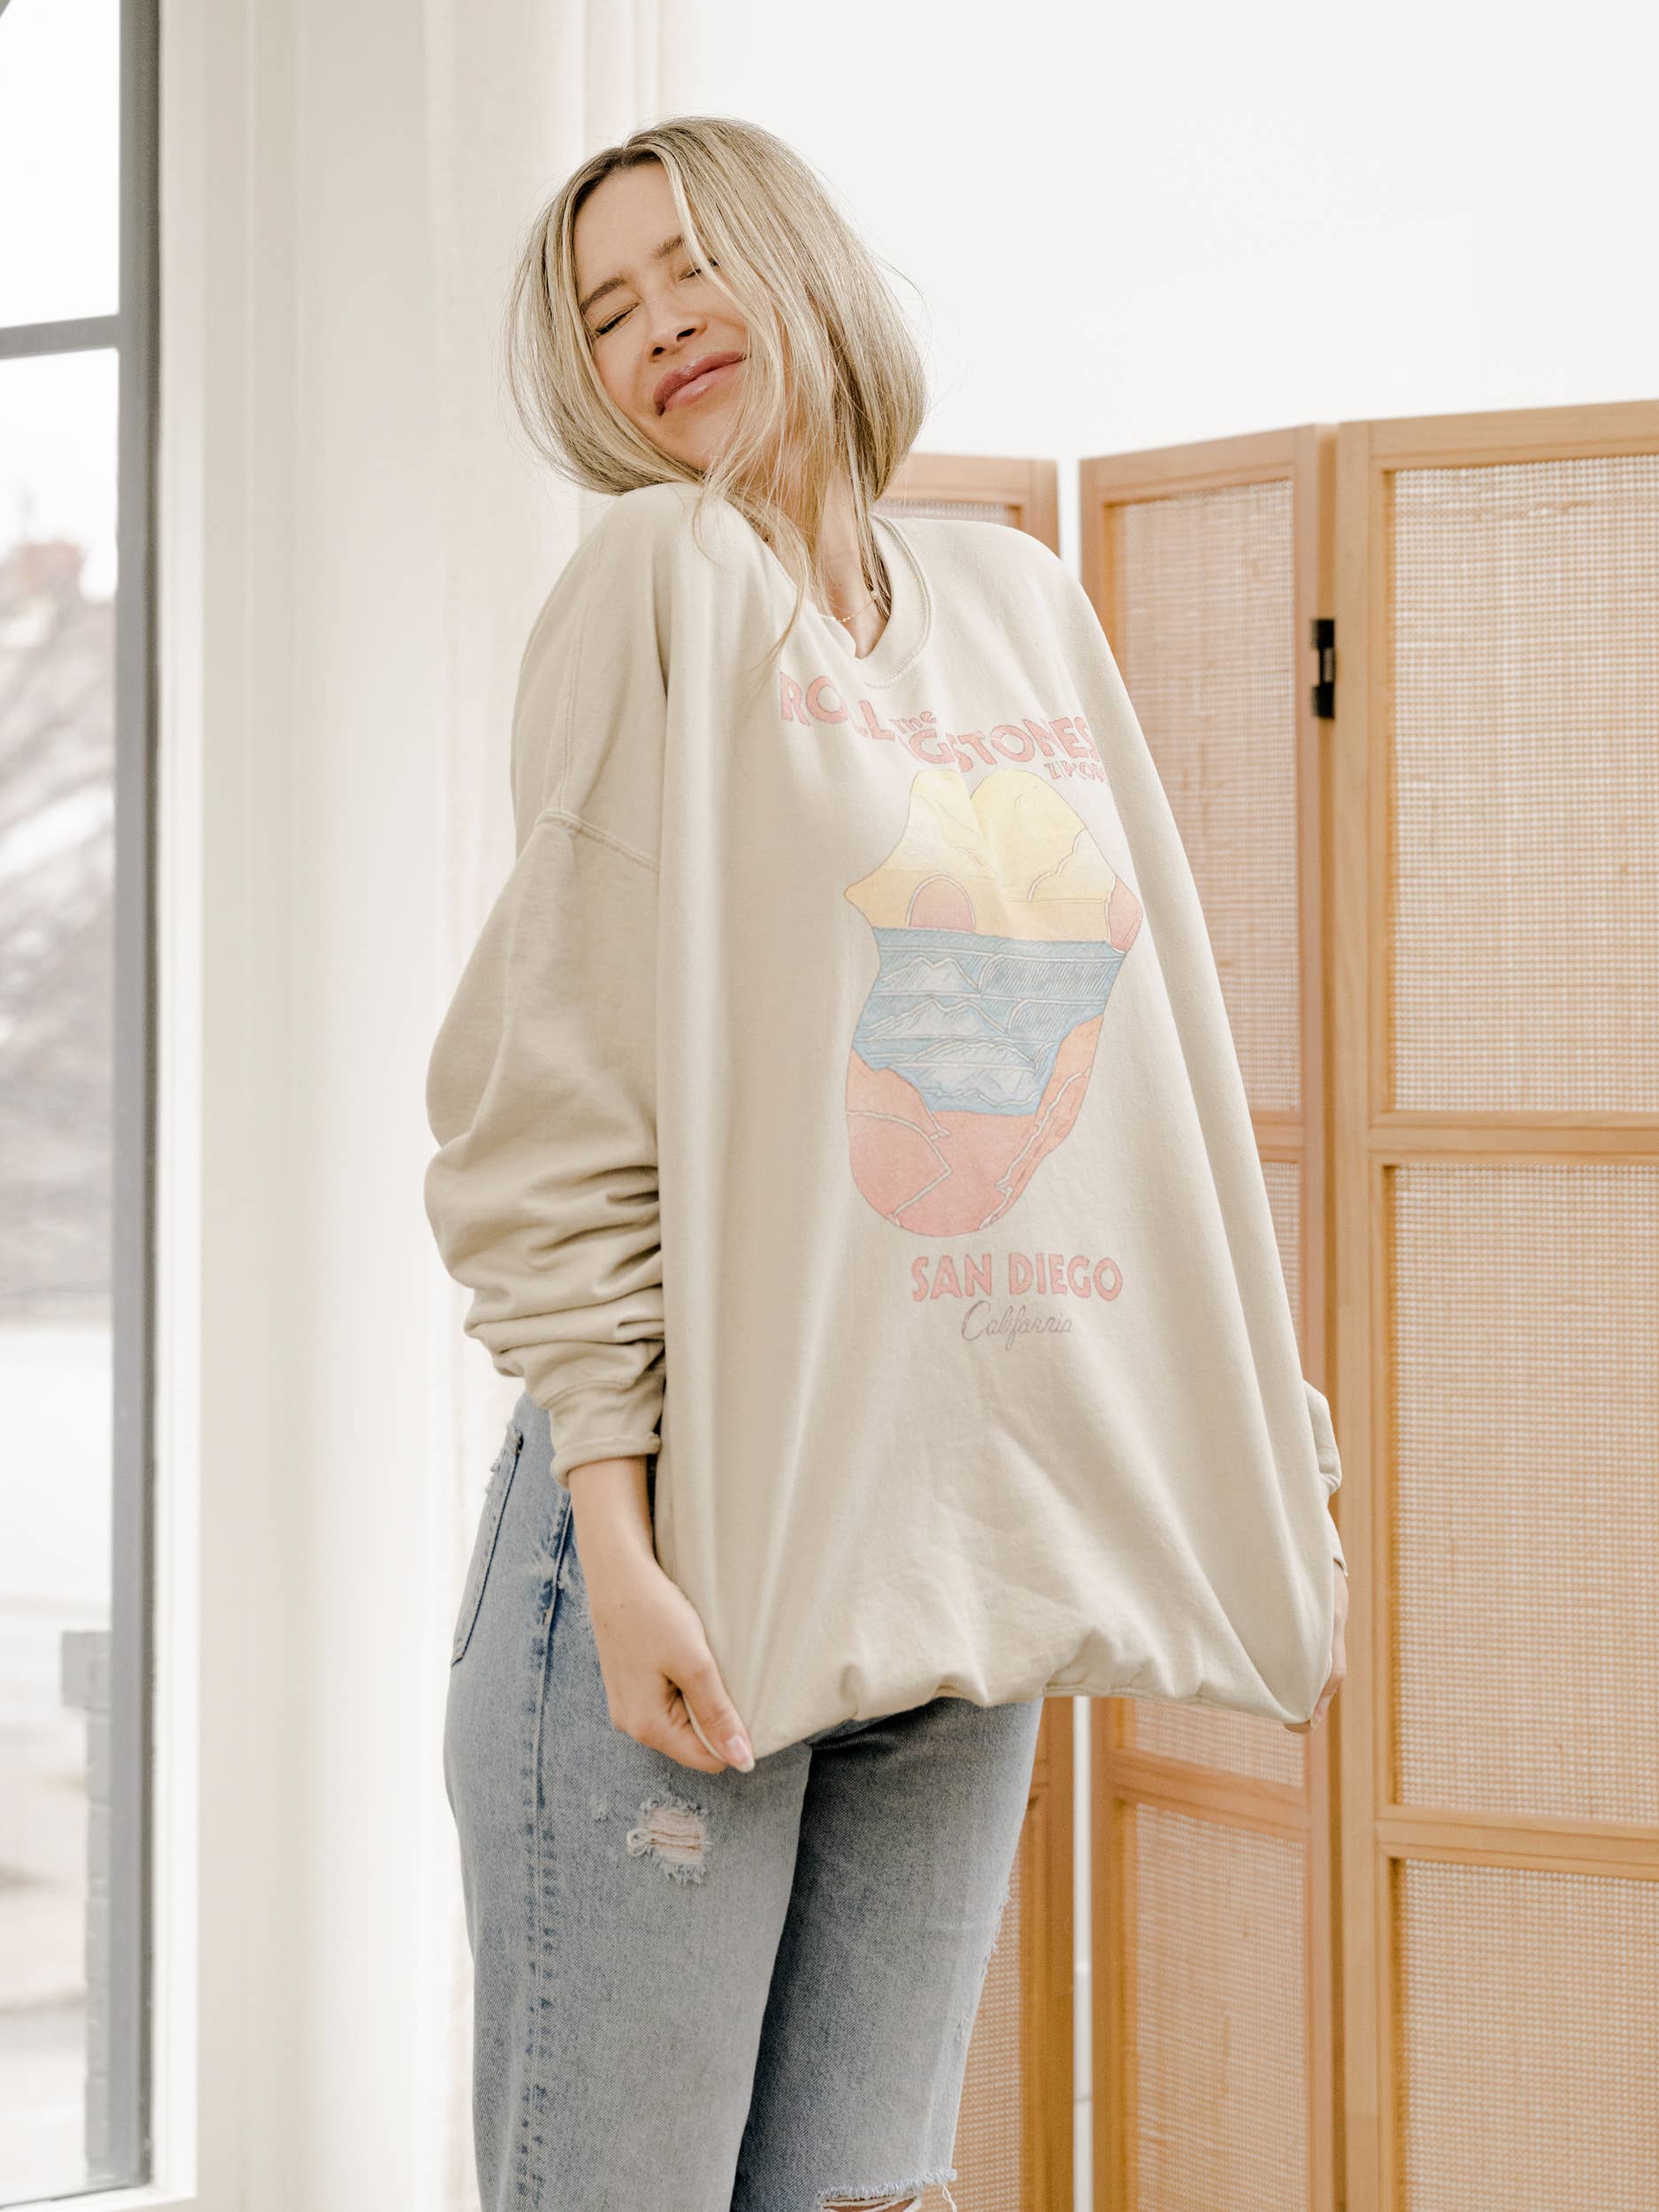 LivyLu - Rolling Stones San Diego Zip Code Sand Thrifted Sweatshirt